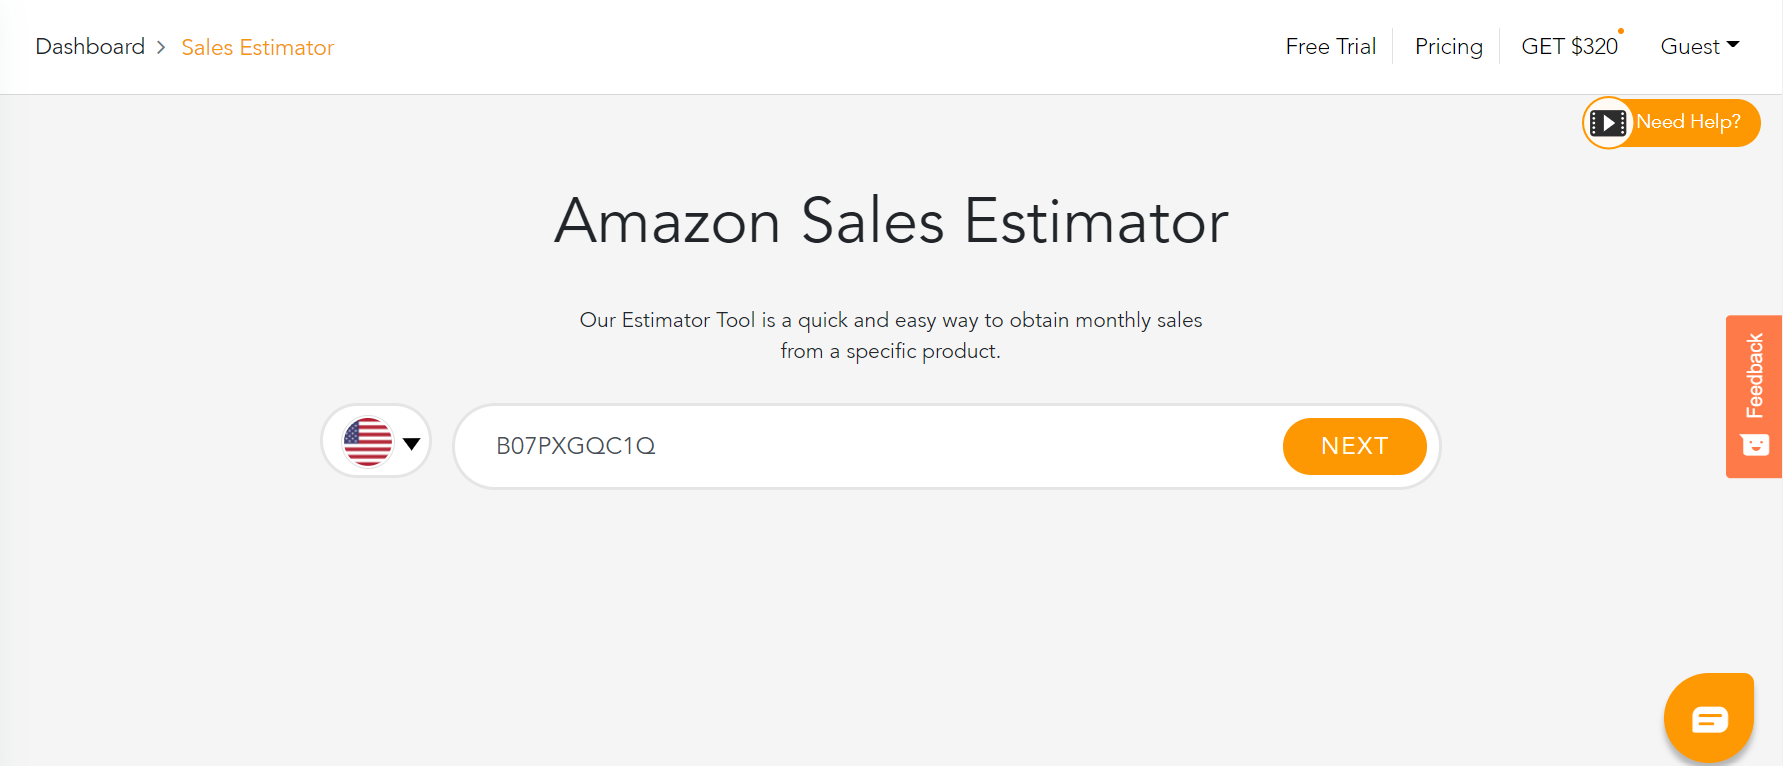 Amazon Sales Estimator